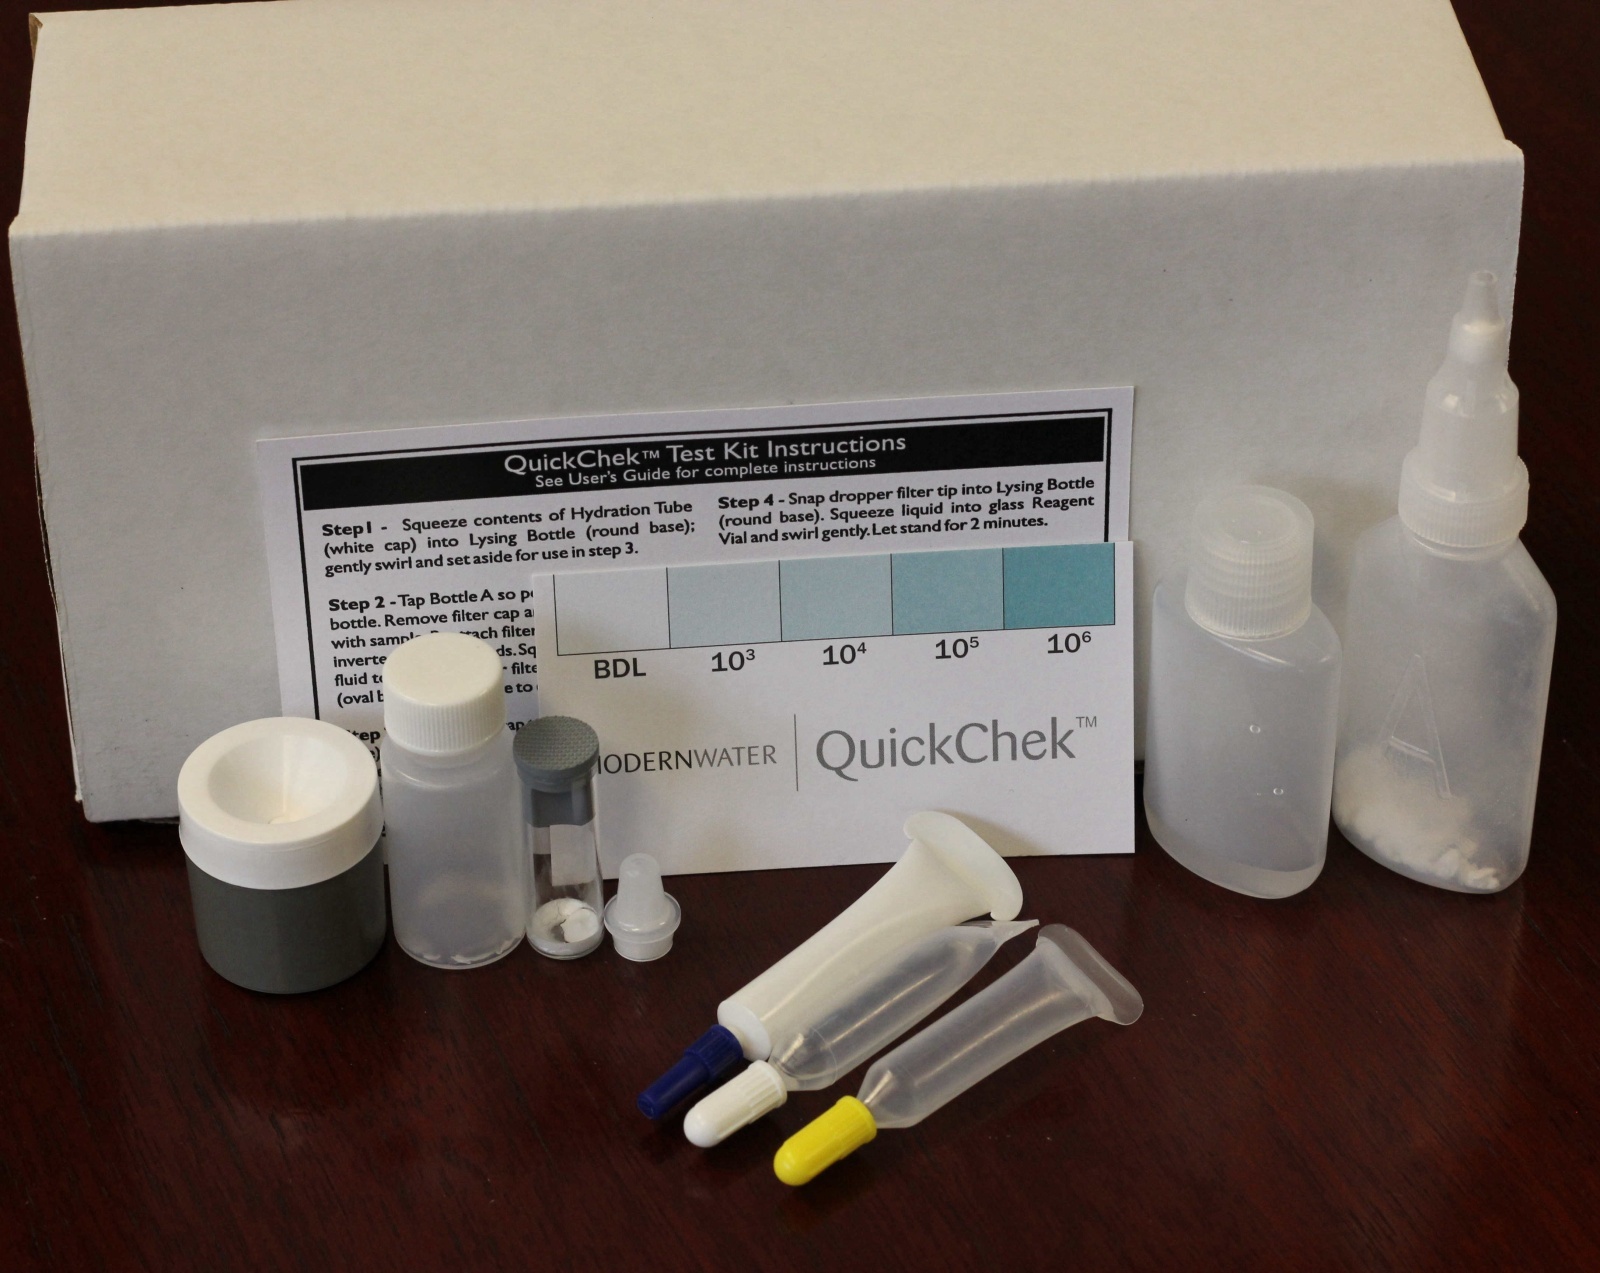 Modern Water QuickChek SRB硫酸盐还原菌检测系统